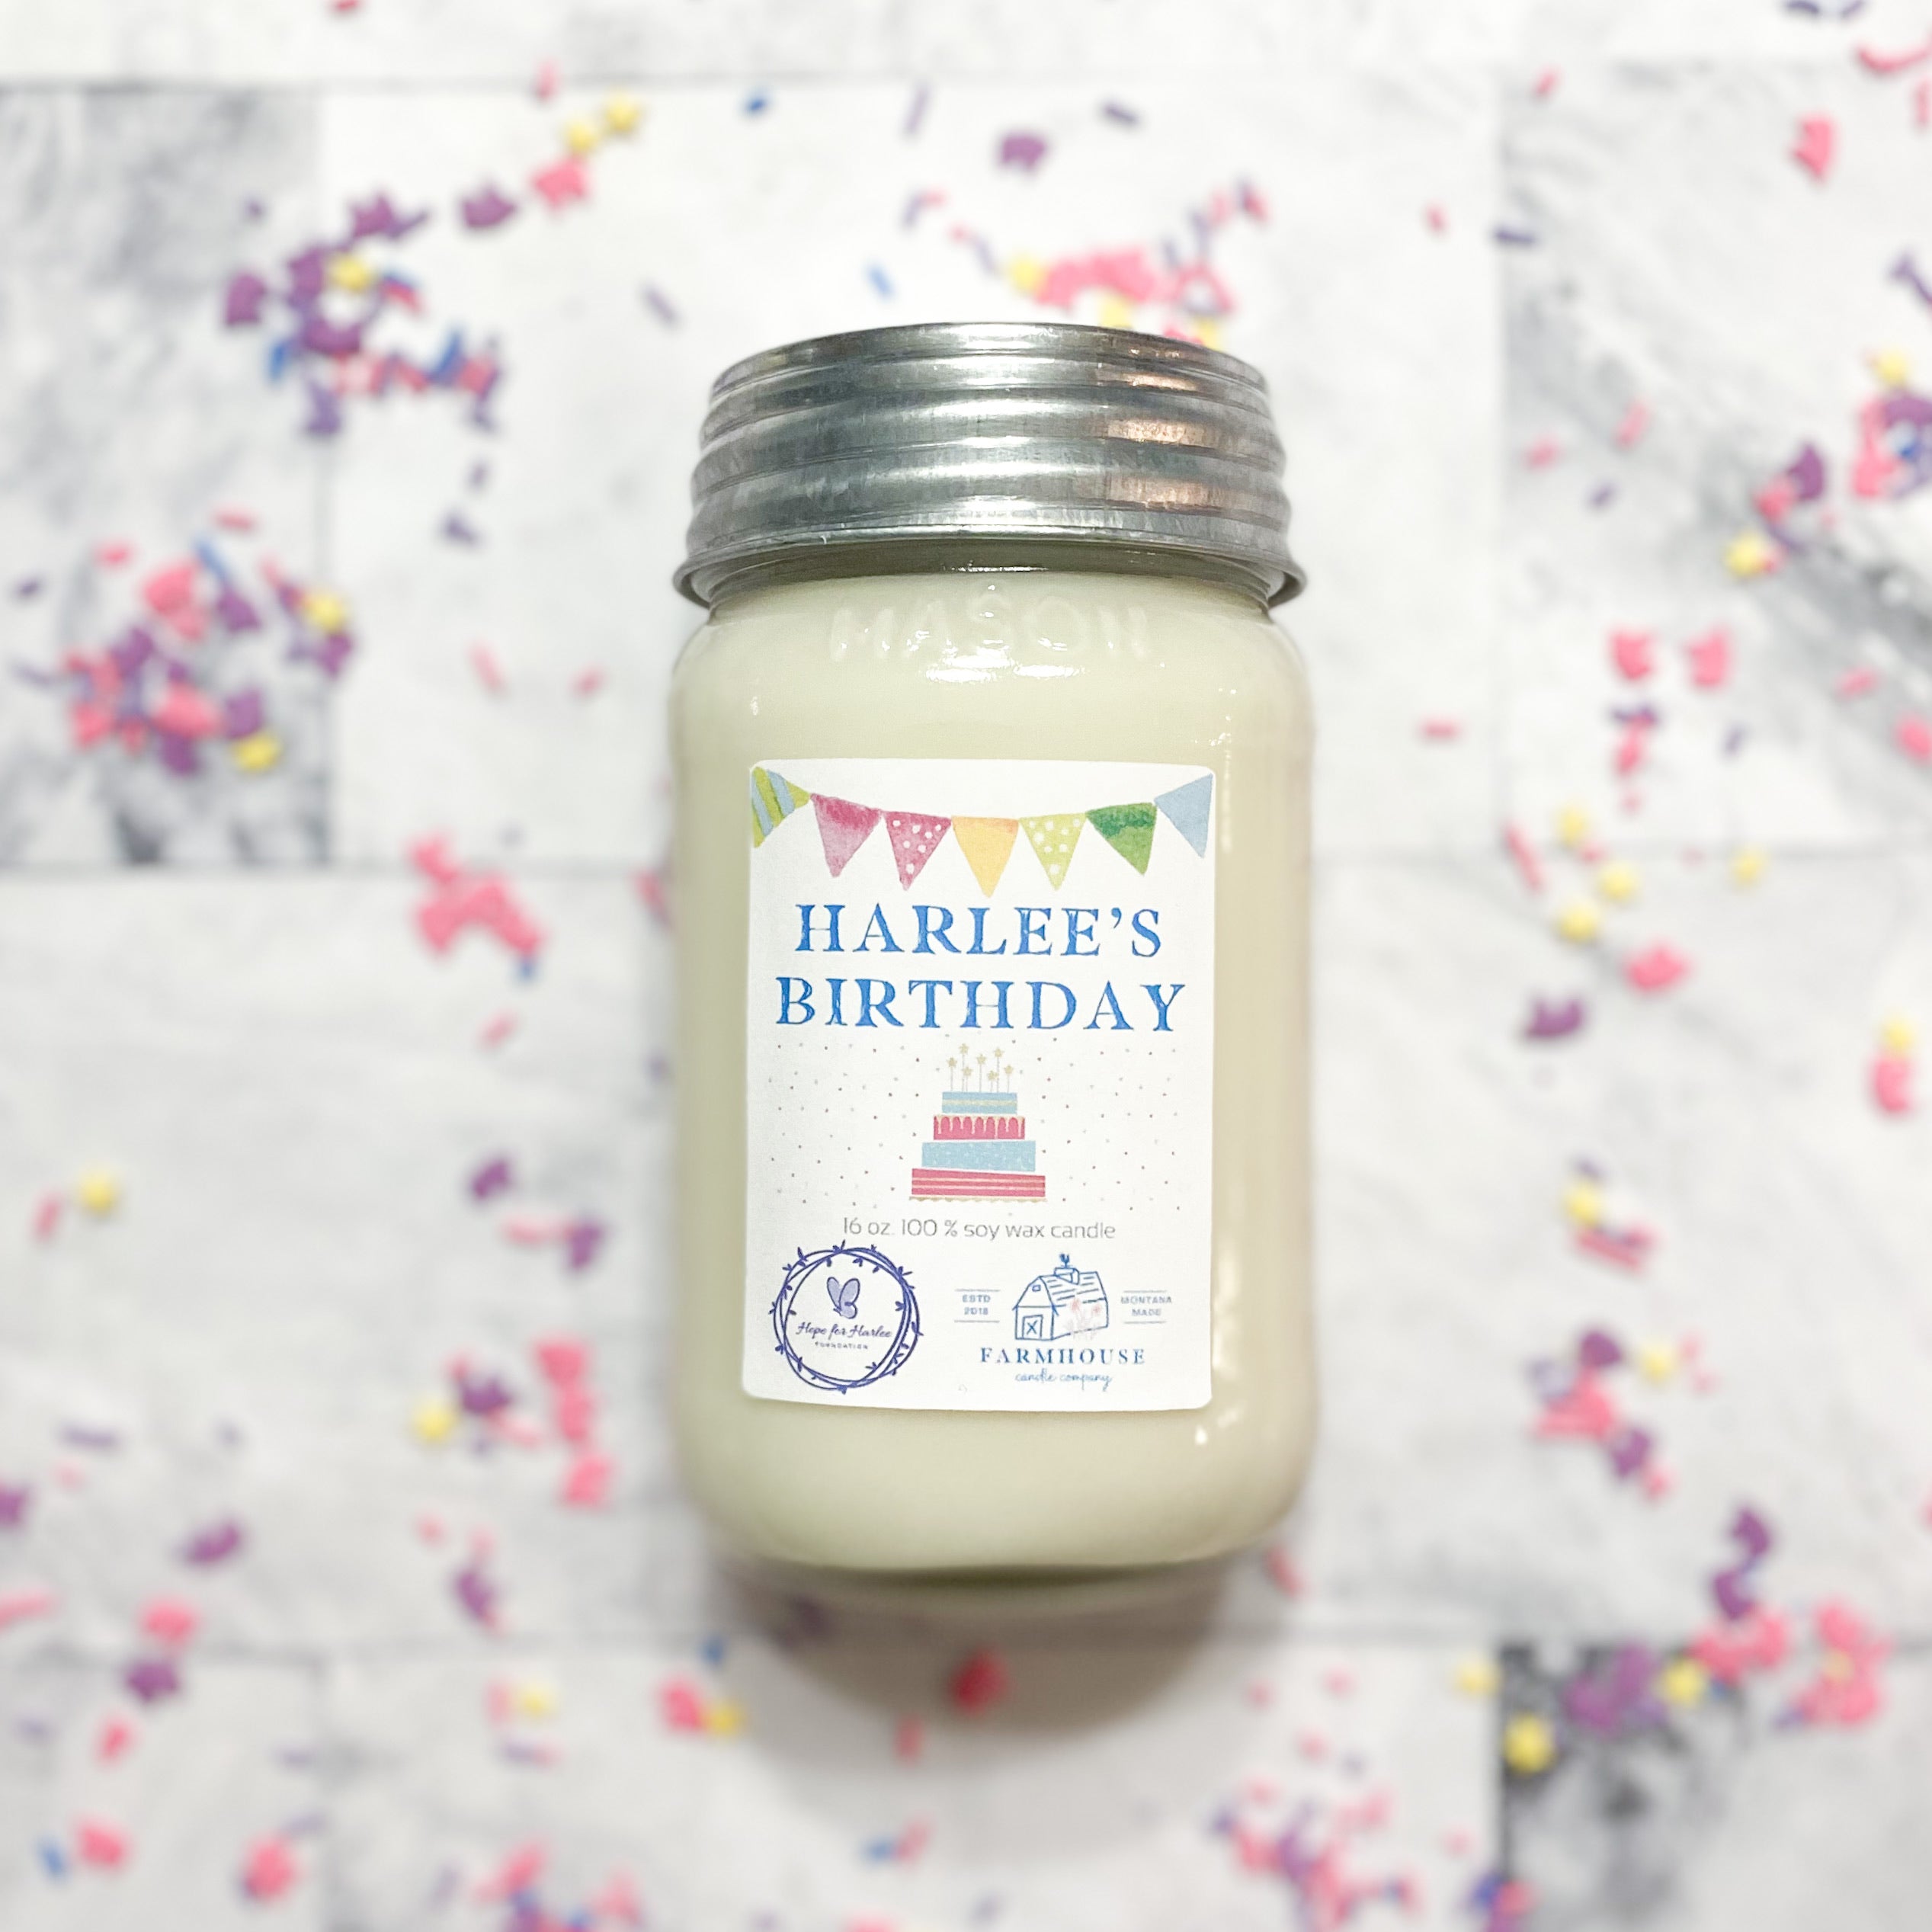 HARLEE’S BIRTHDAY 16 oz Mason Jar candle